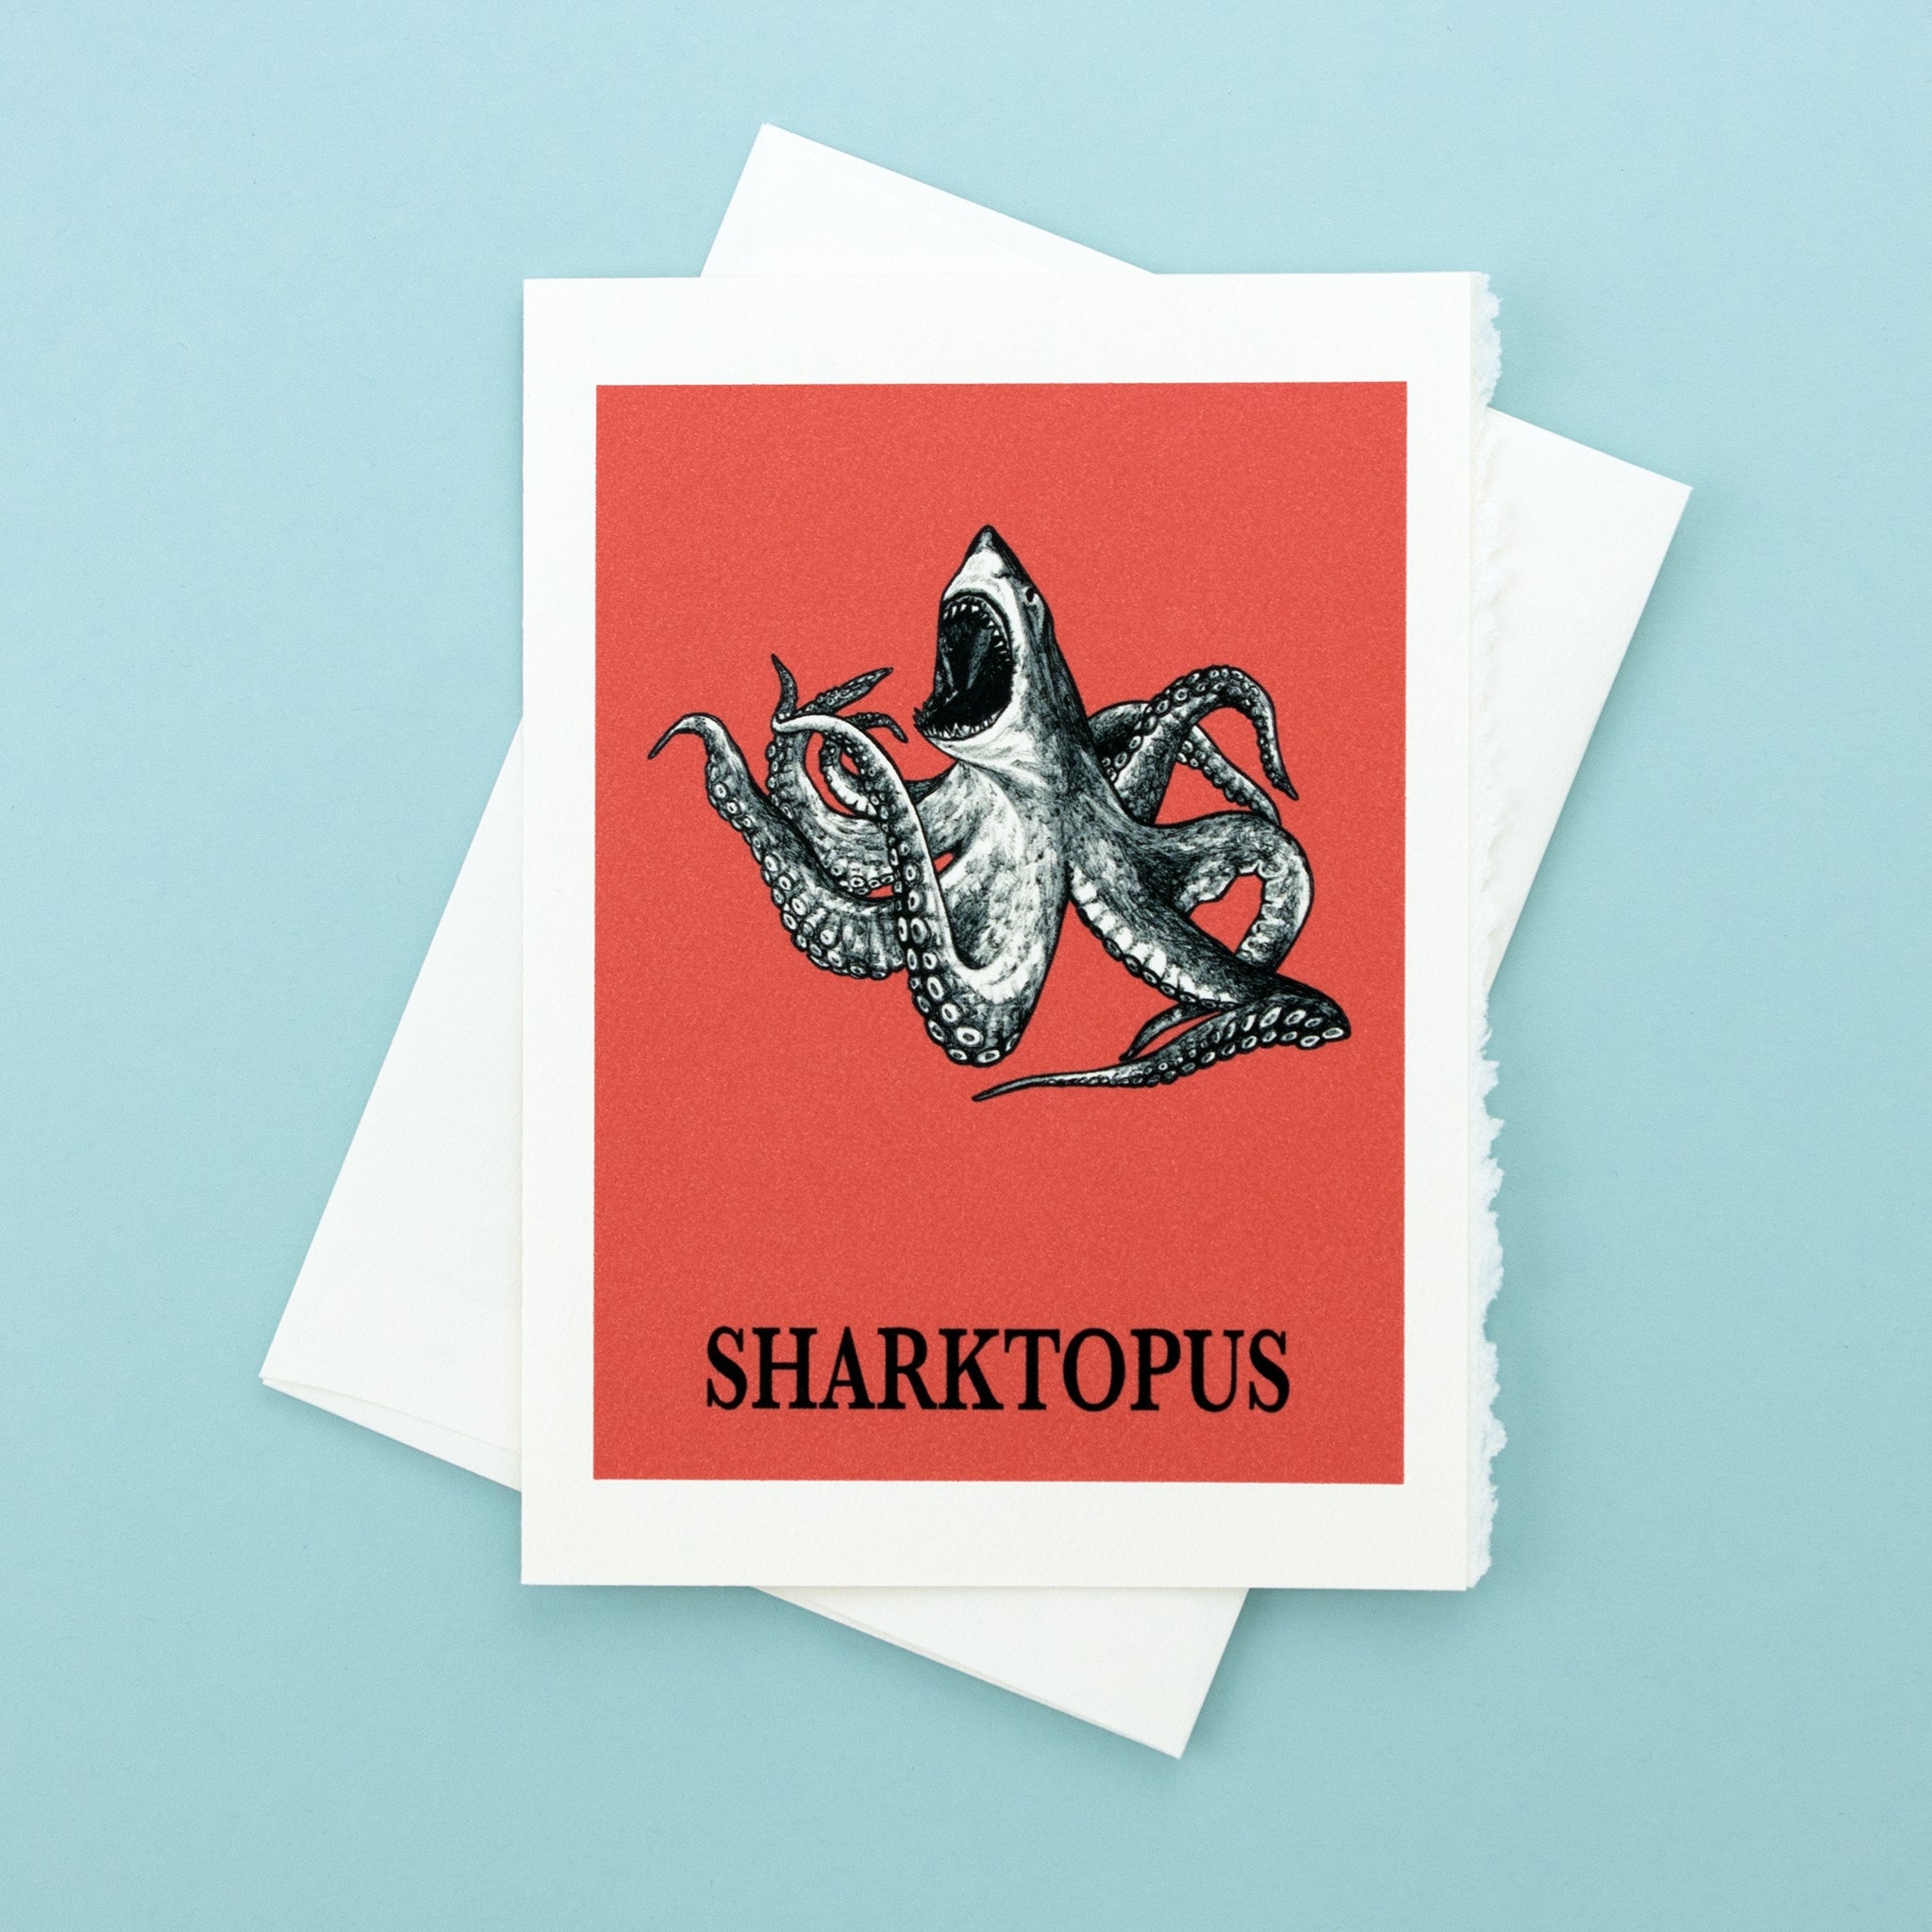 Sharktopus 5x7" Greeting Card